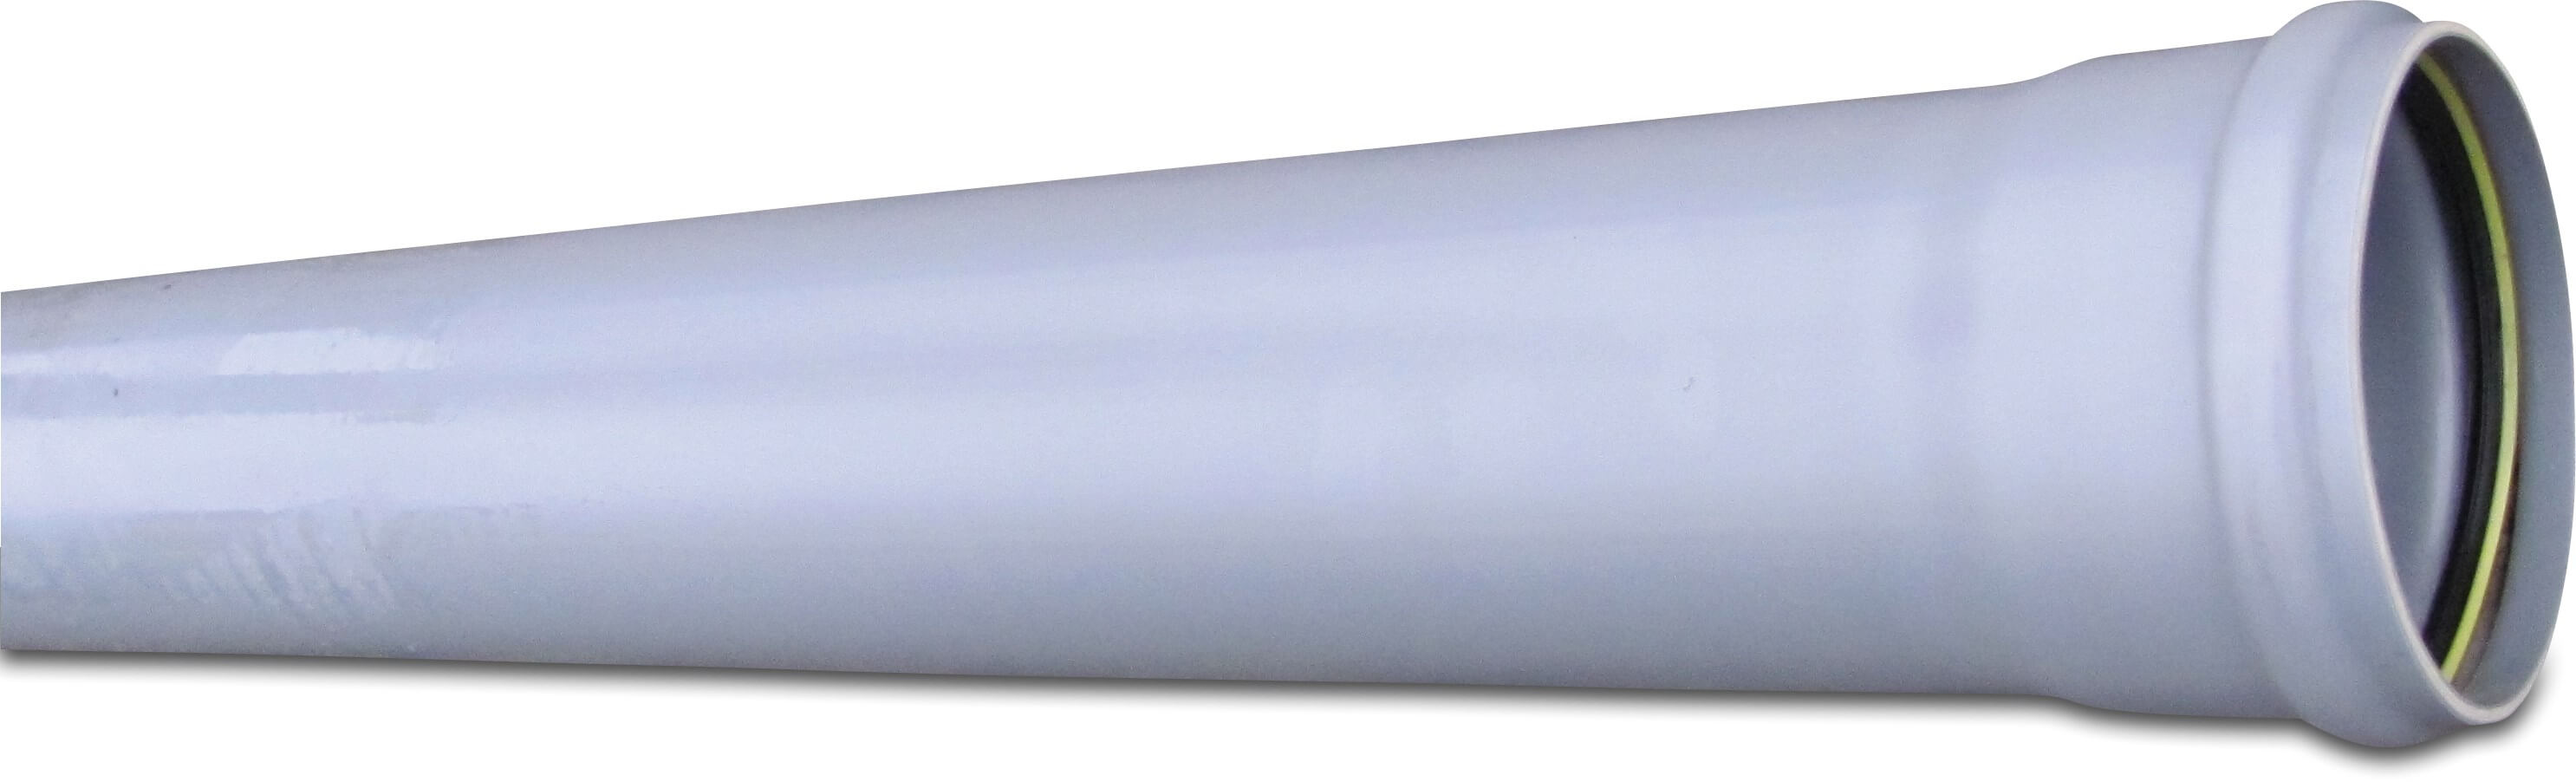 Abflussrohr PVC-U 125 mm x 3,7 mm SN8 Steckmuffe x Glatt Grau 5m KOMO